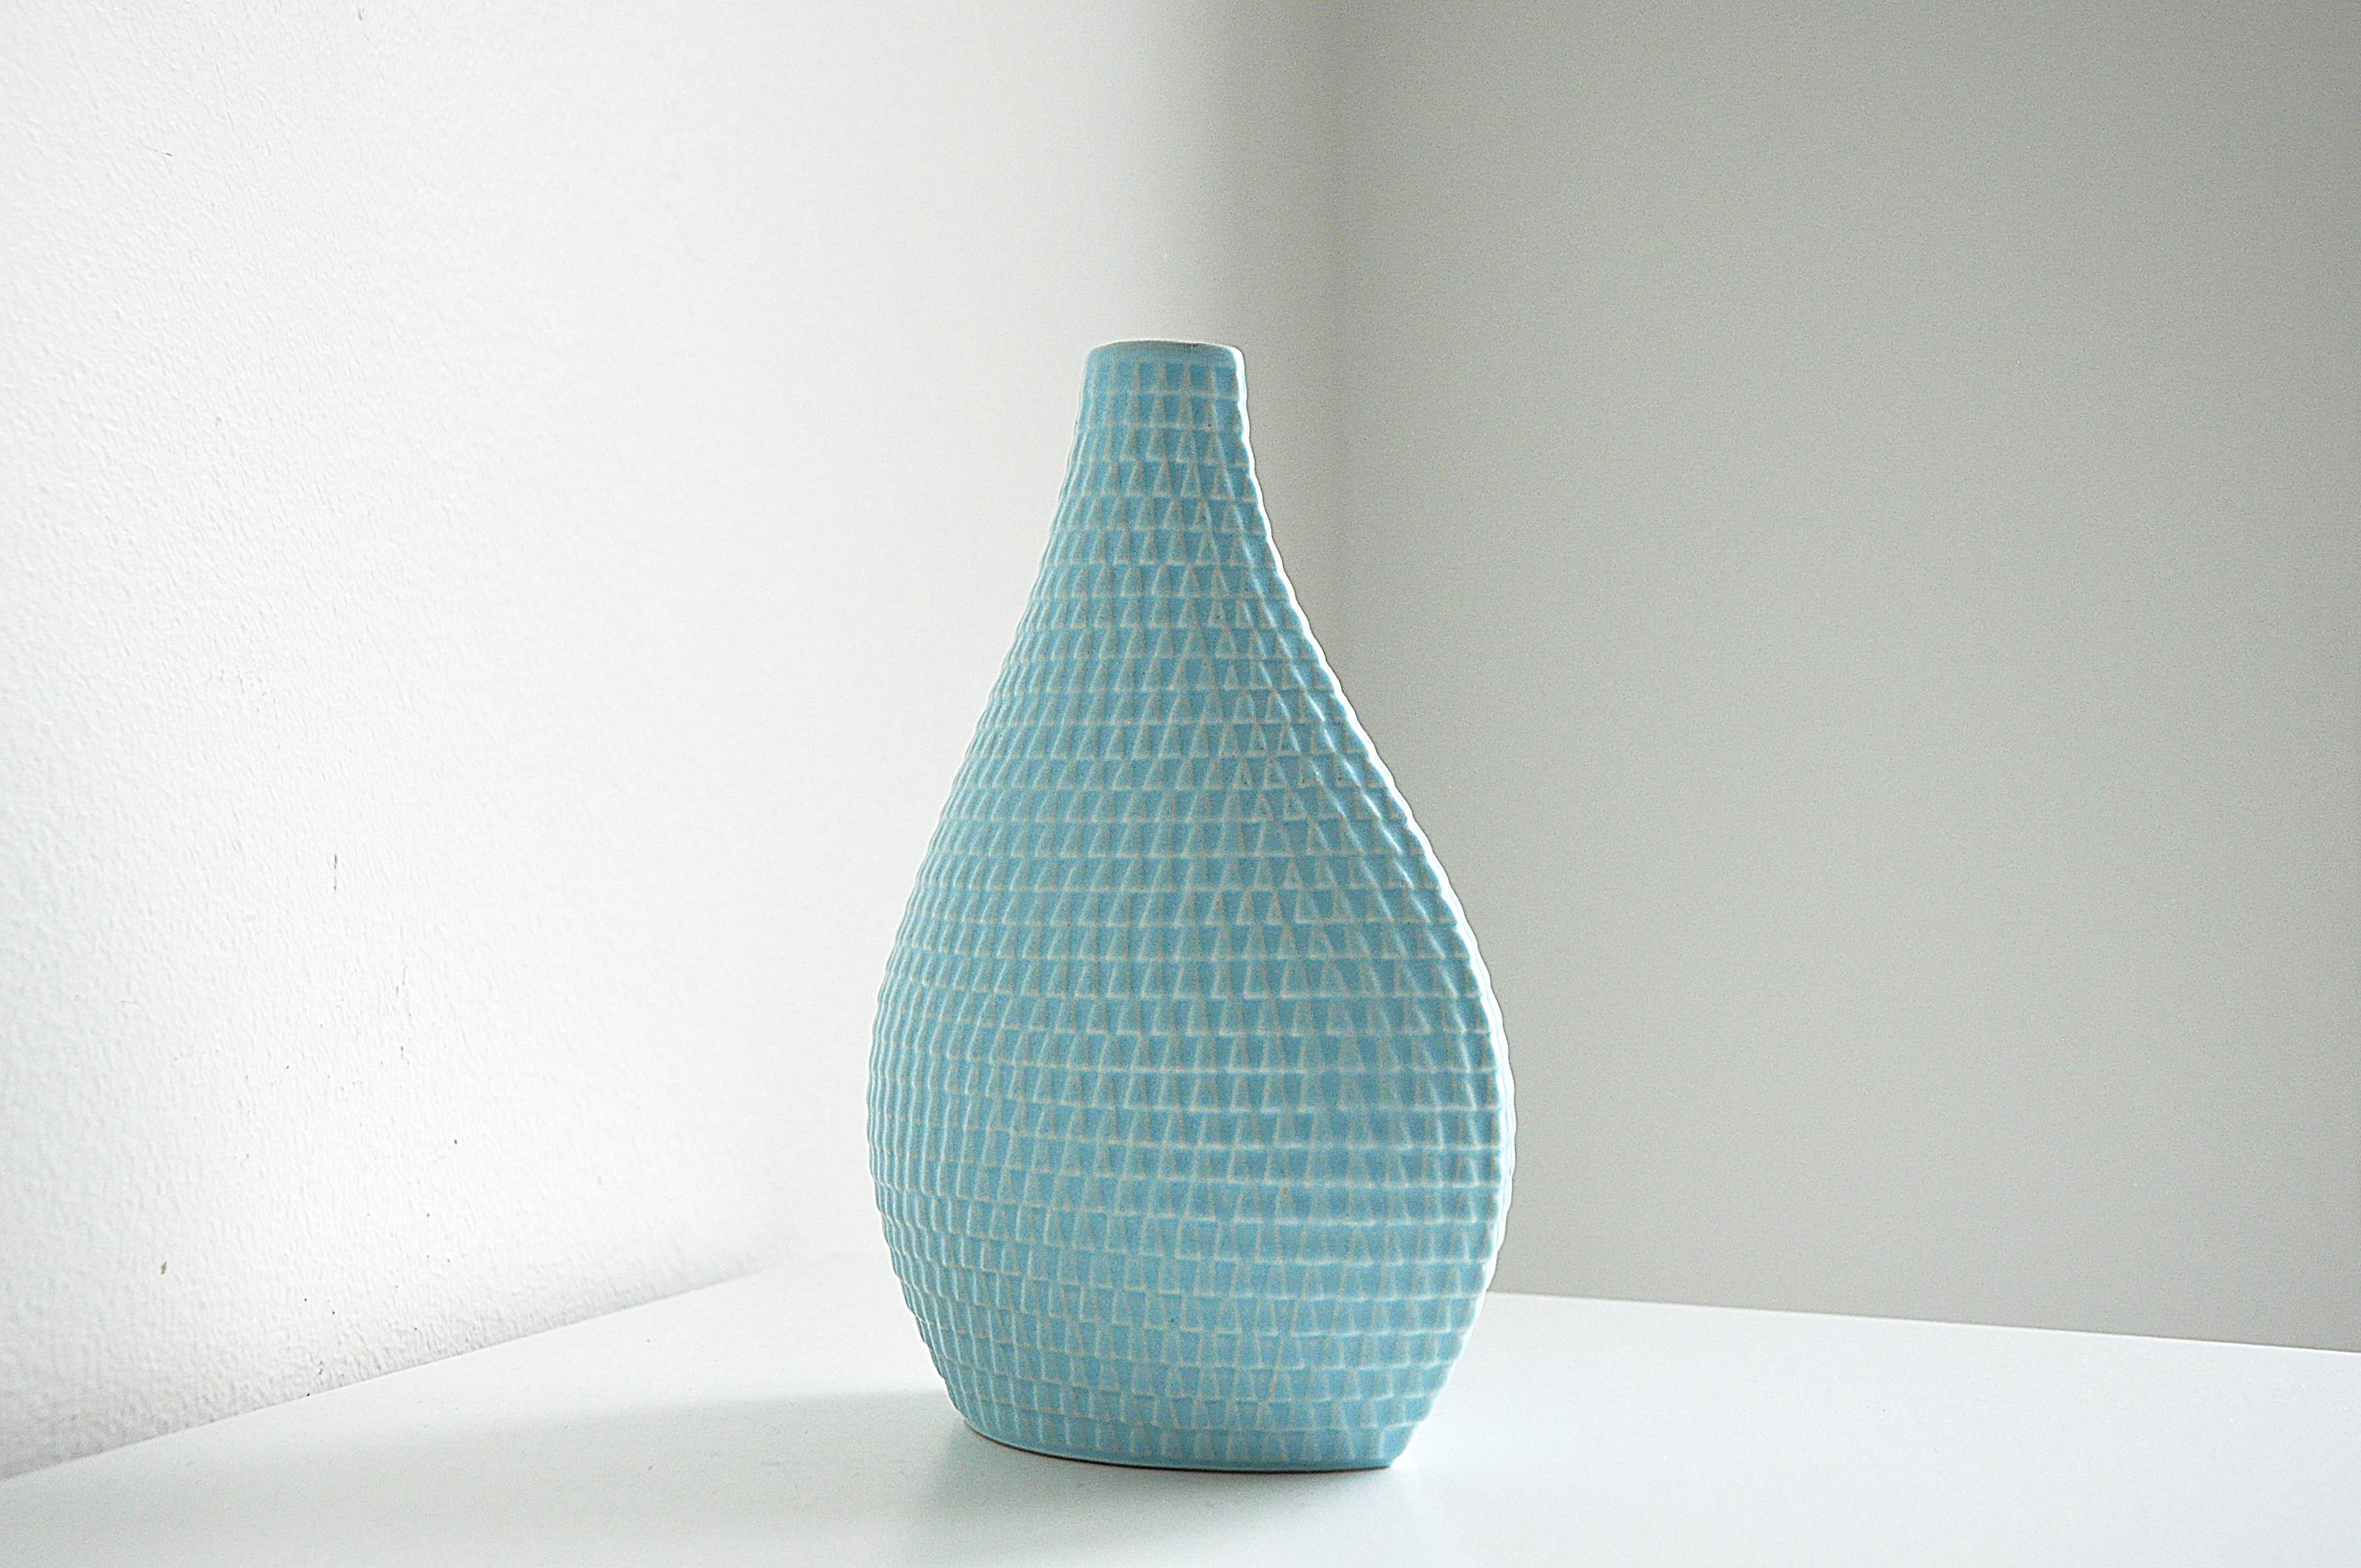 Light blue vase, from the Reptile series by Stig Lindberg, Gustavsberg, Sweden.